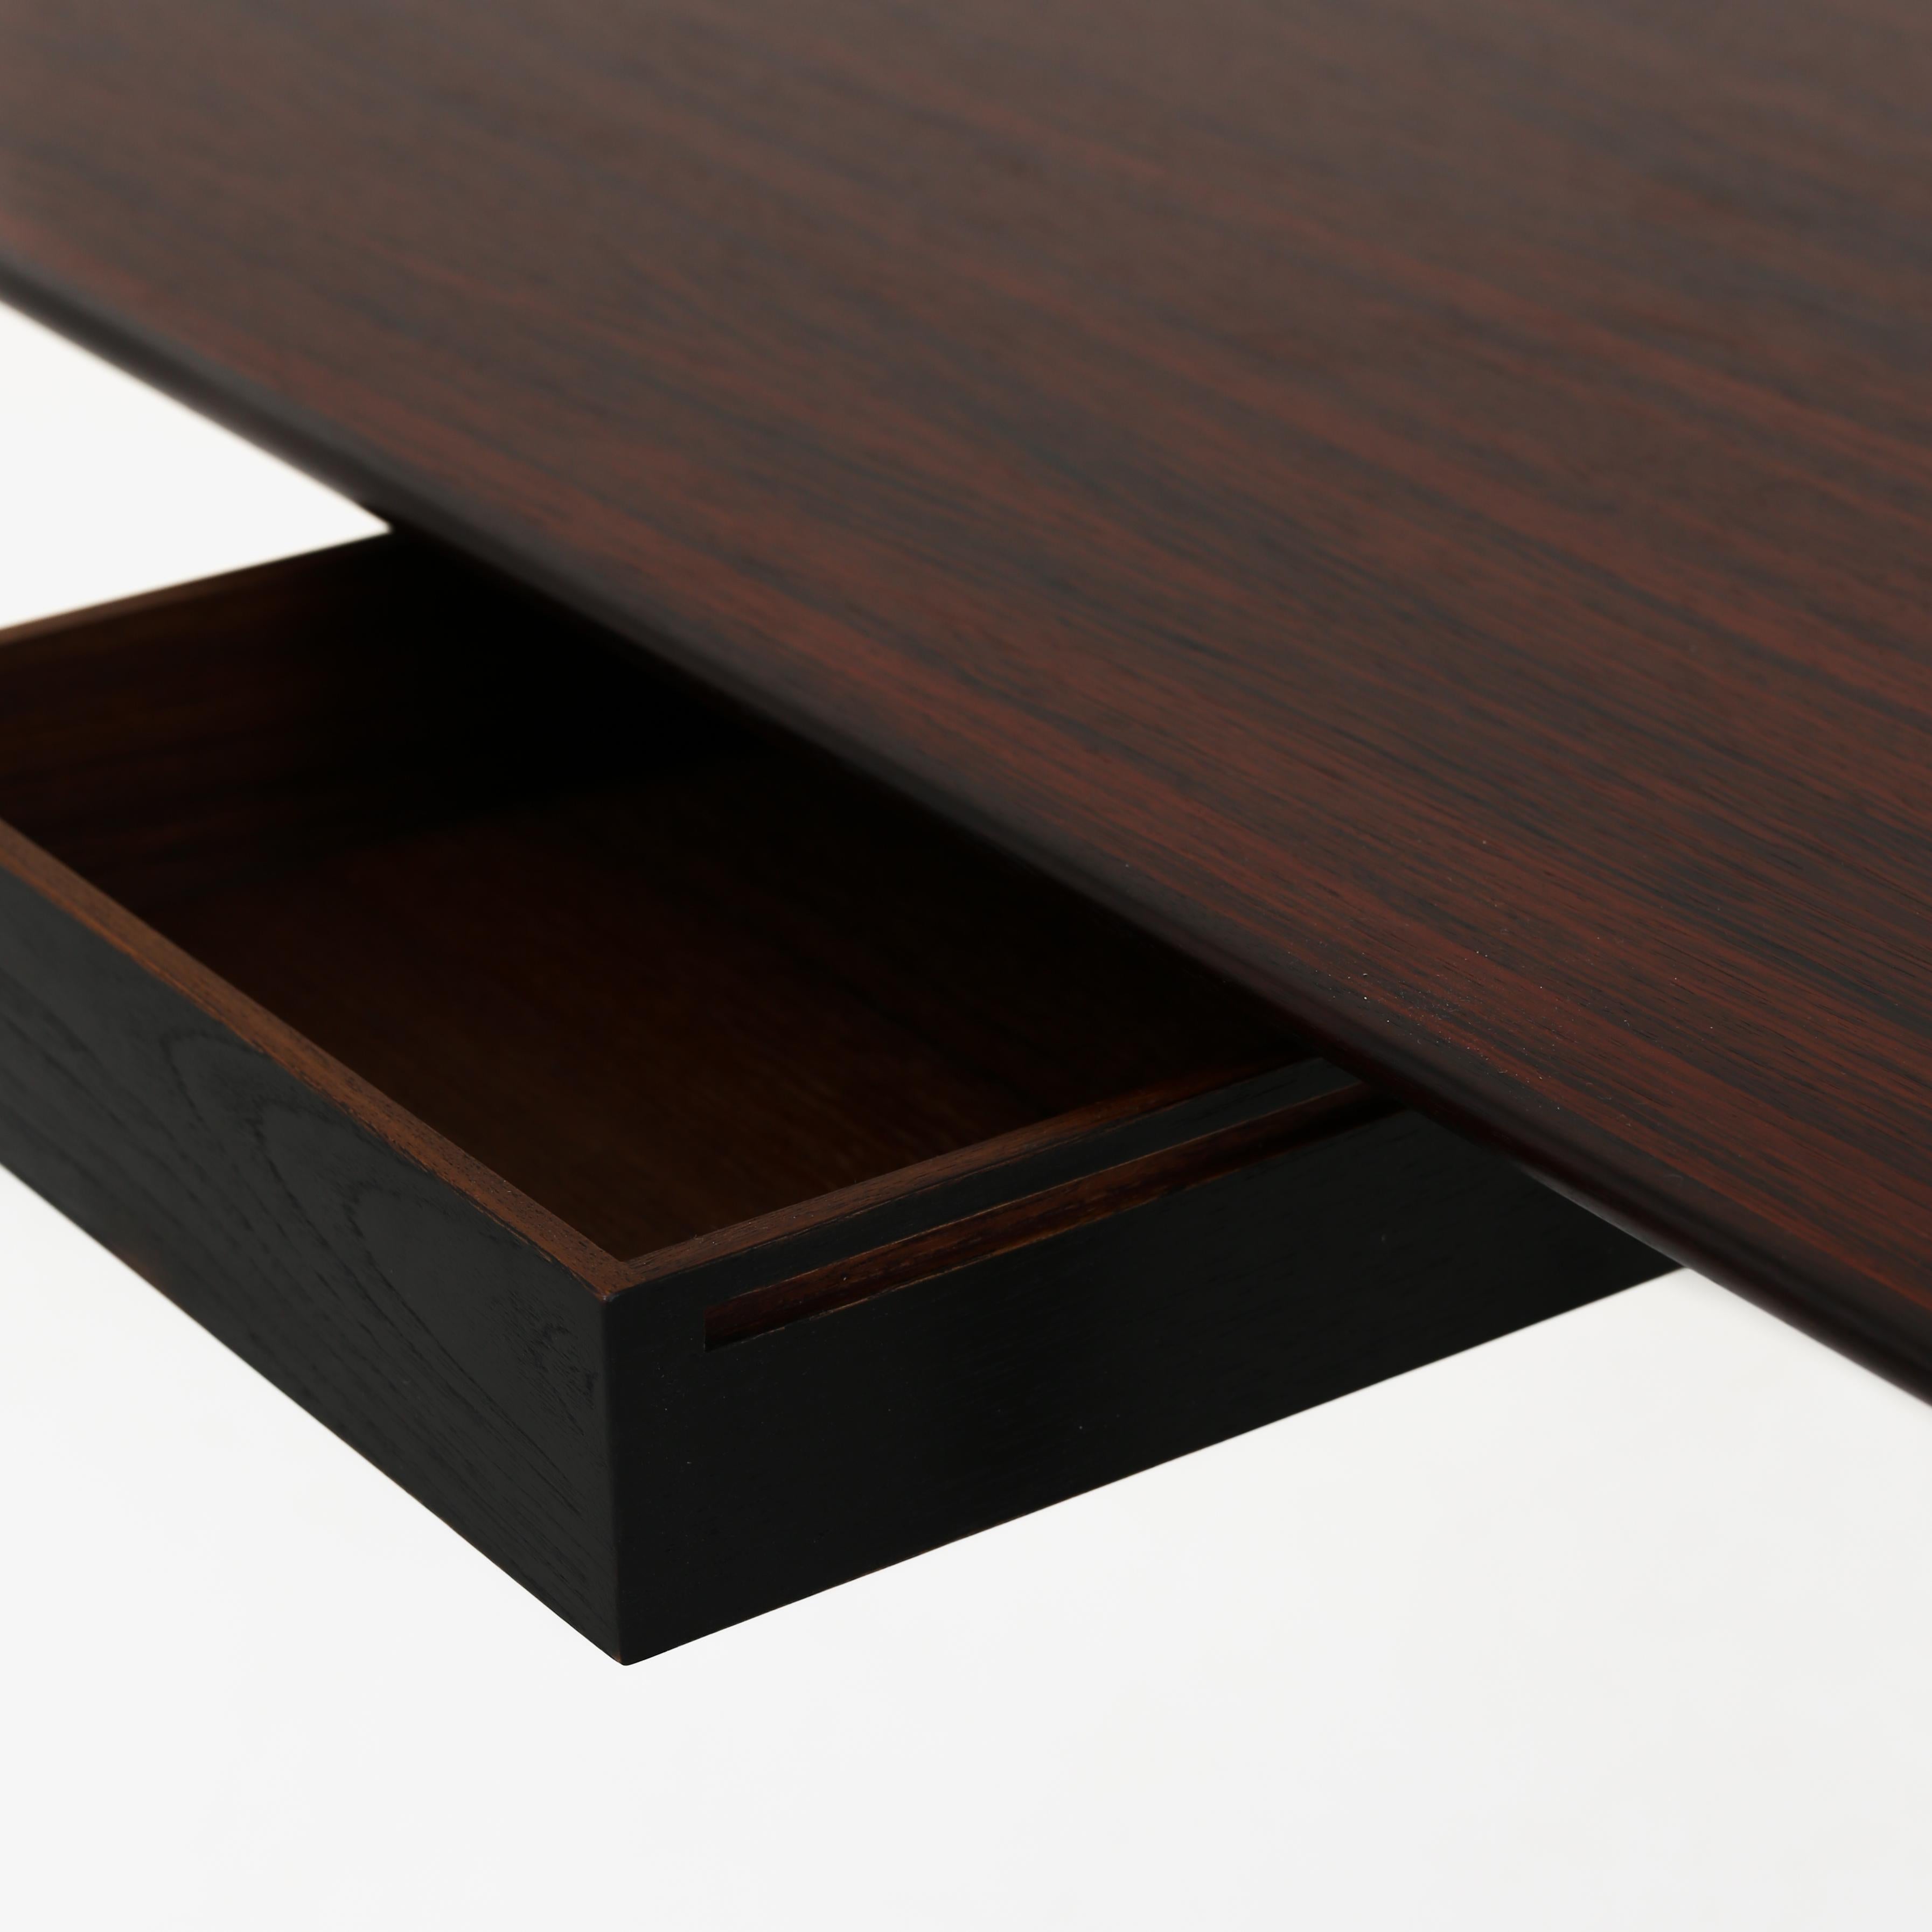 Danish Rosewood desk by Arne Jacobsen For Sale